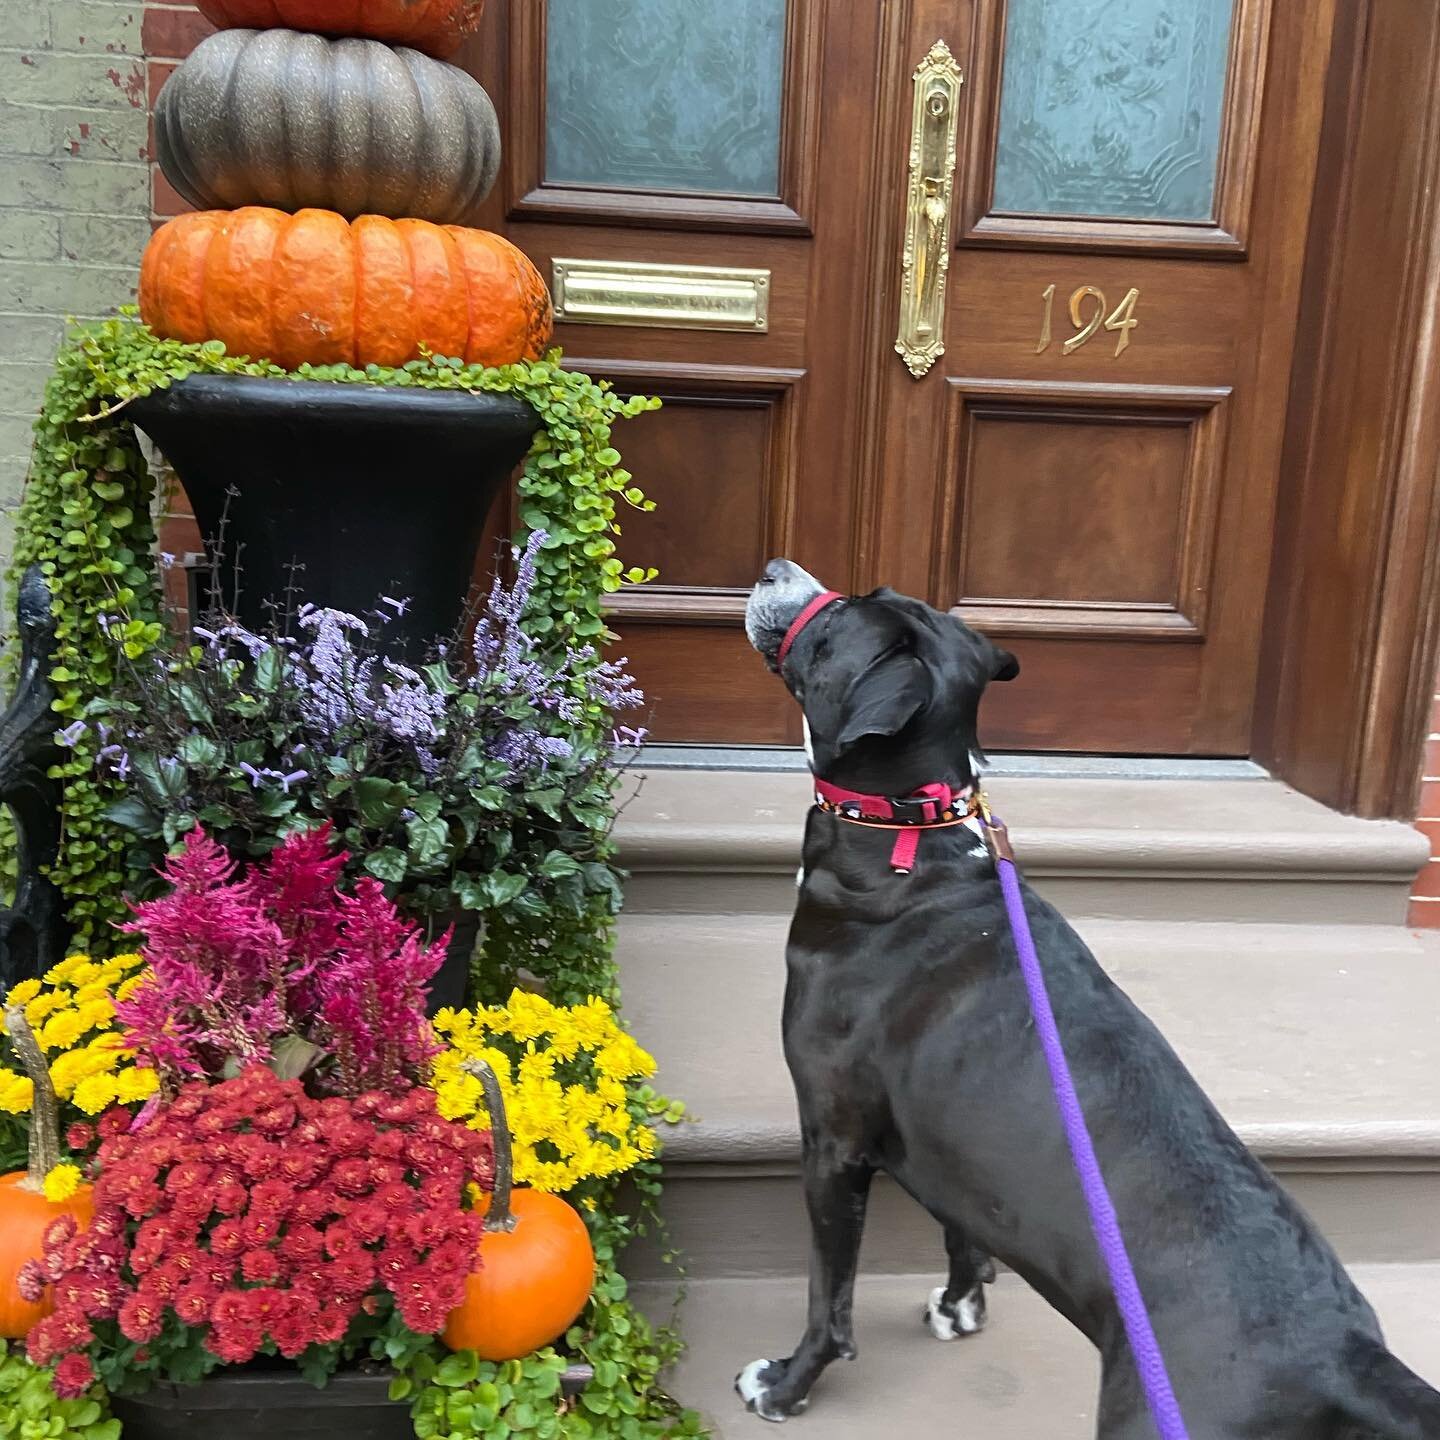 Miss Gracie Mae Mae admiring the autumnal artistic stoop display.  #dogwalker #southendboston